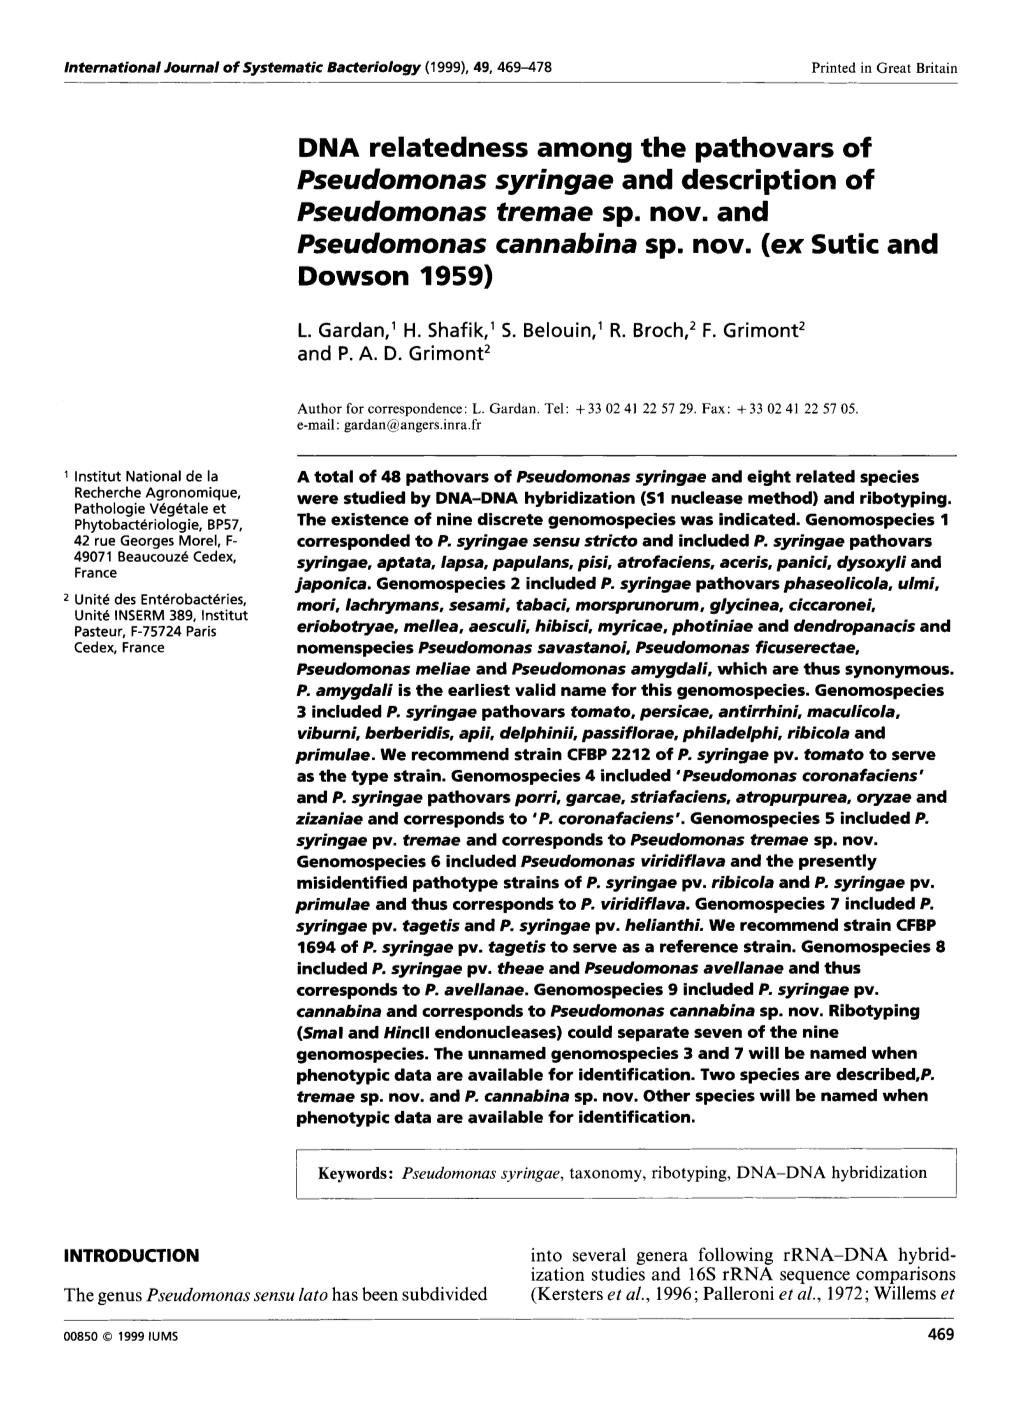 DNA Relatedness Among the Pathovars of Pseudomonas Syringae and Description of Pseudomonas Tremae Sp. Nov. and Pseudornonas Cannabina Sp